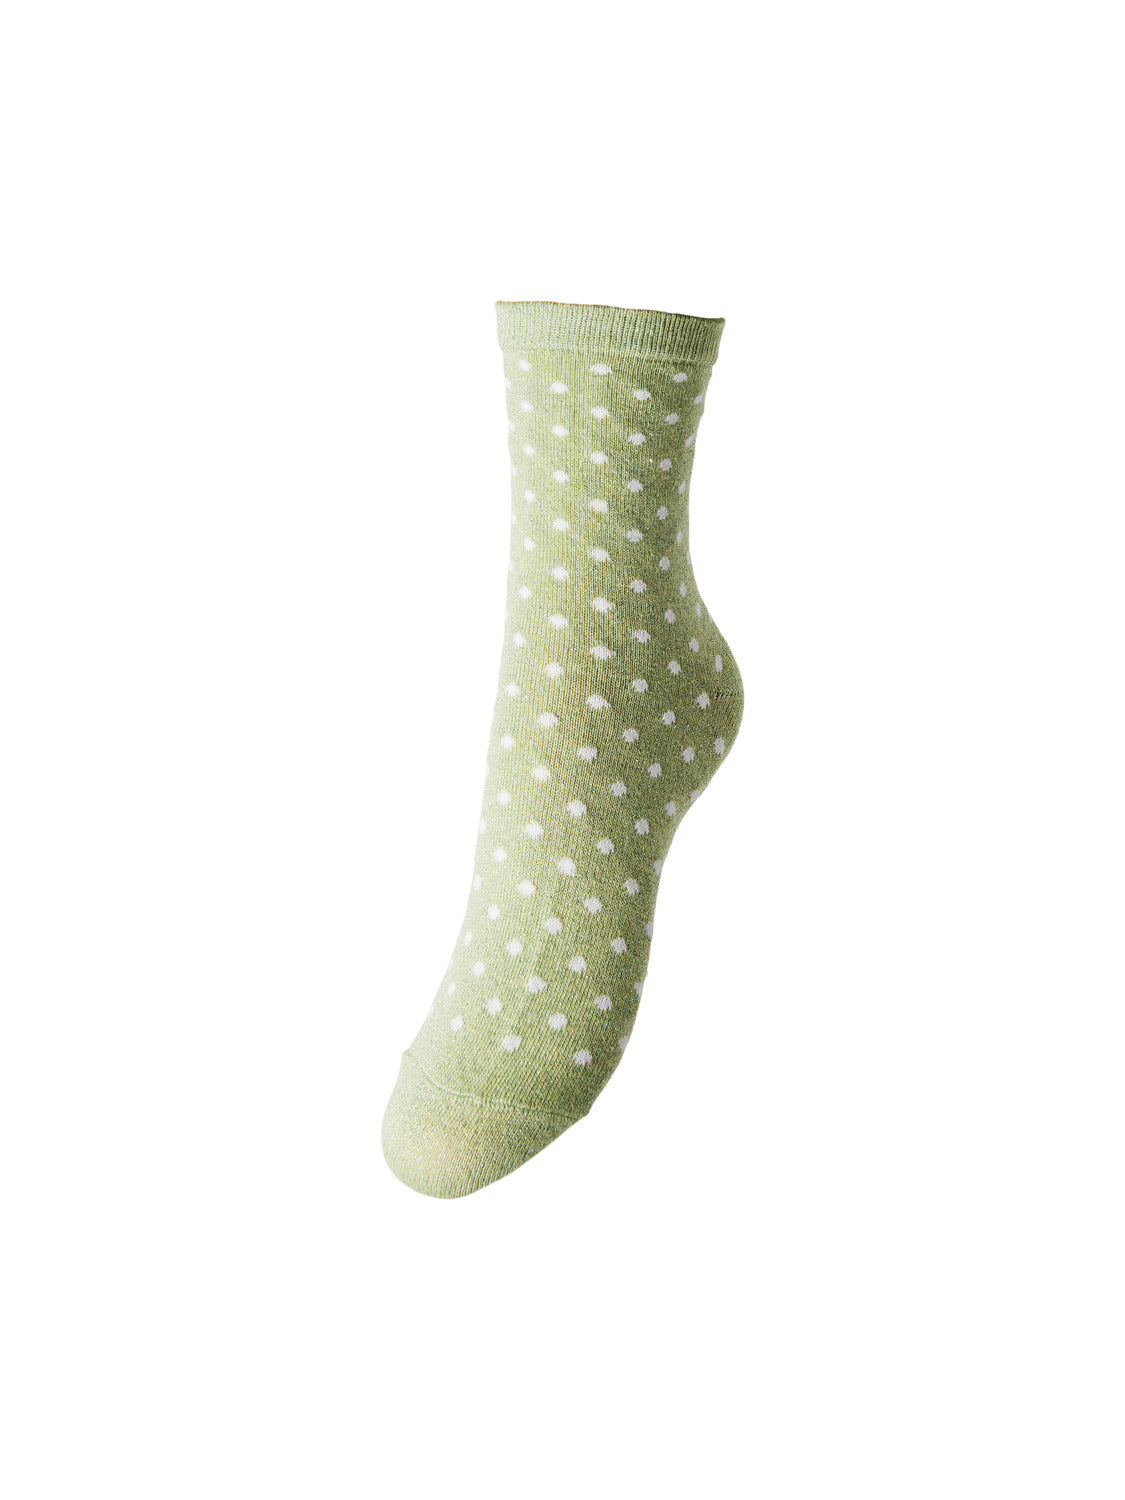 PCSEBBY Socks - Quiet Green